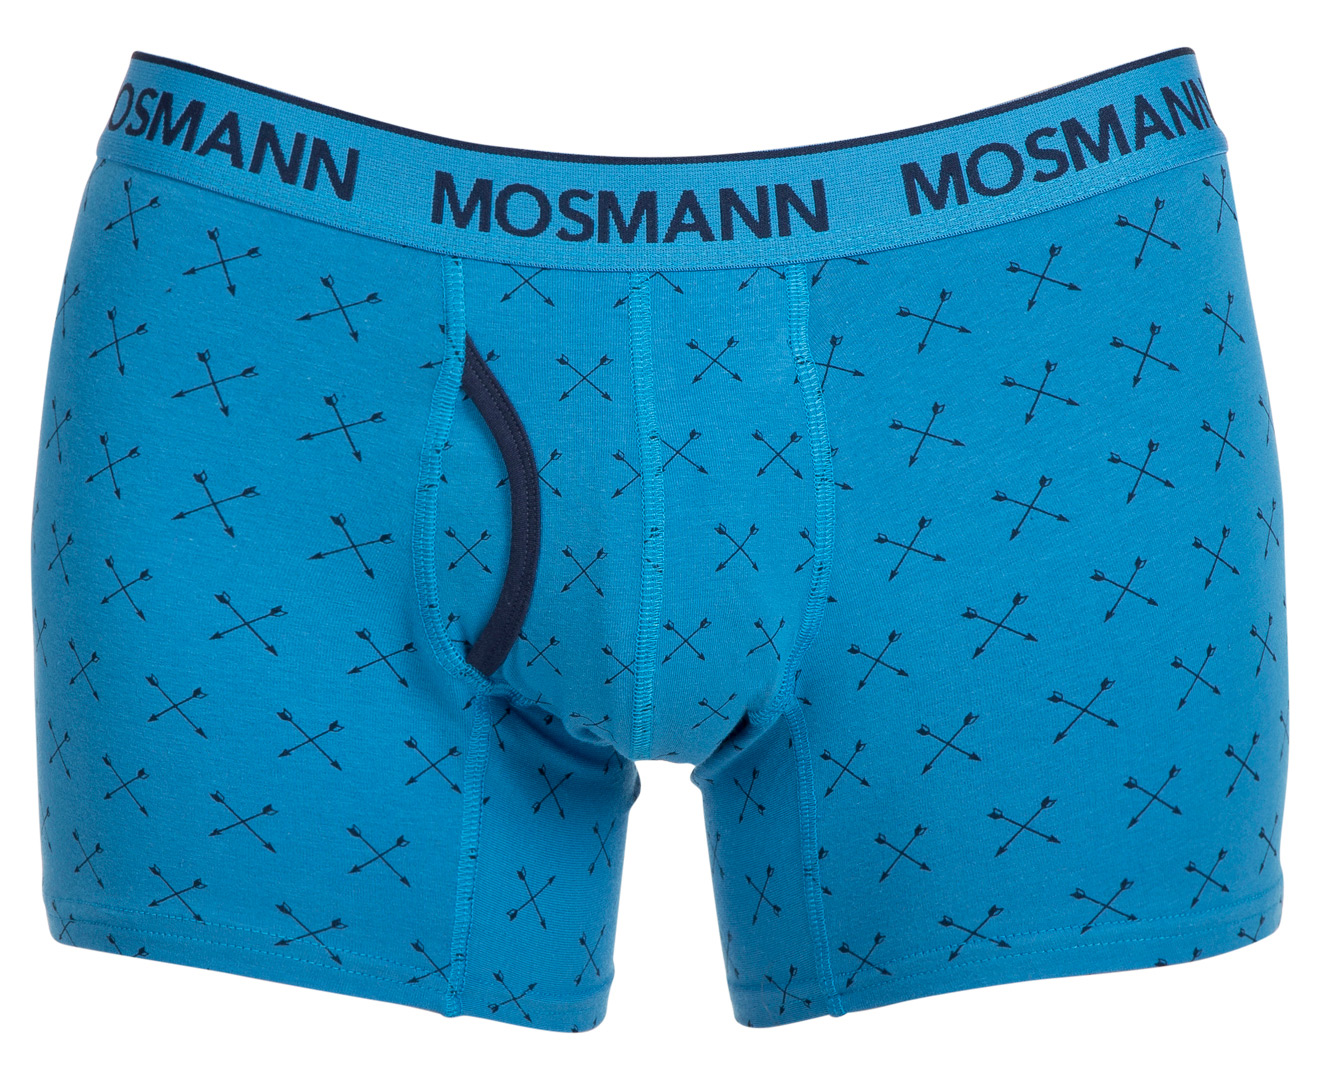 Mosmann Men's Boxer L-Leg Underwear 2-Pack - Grey/Arrows | Great daily ...